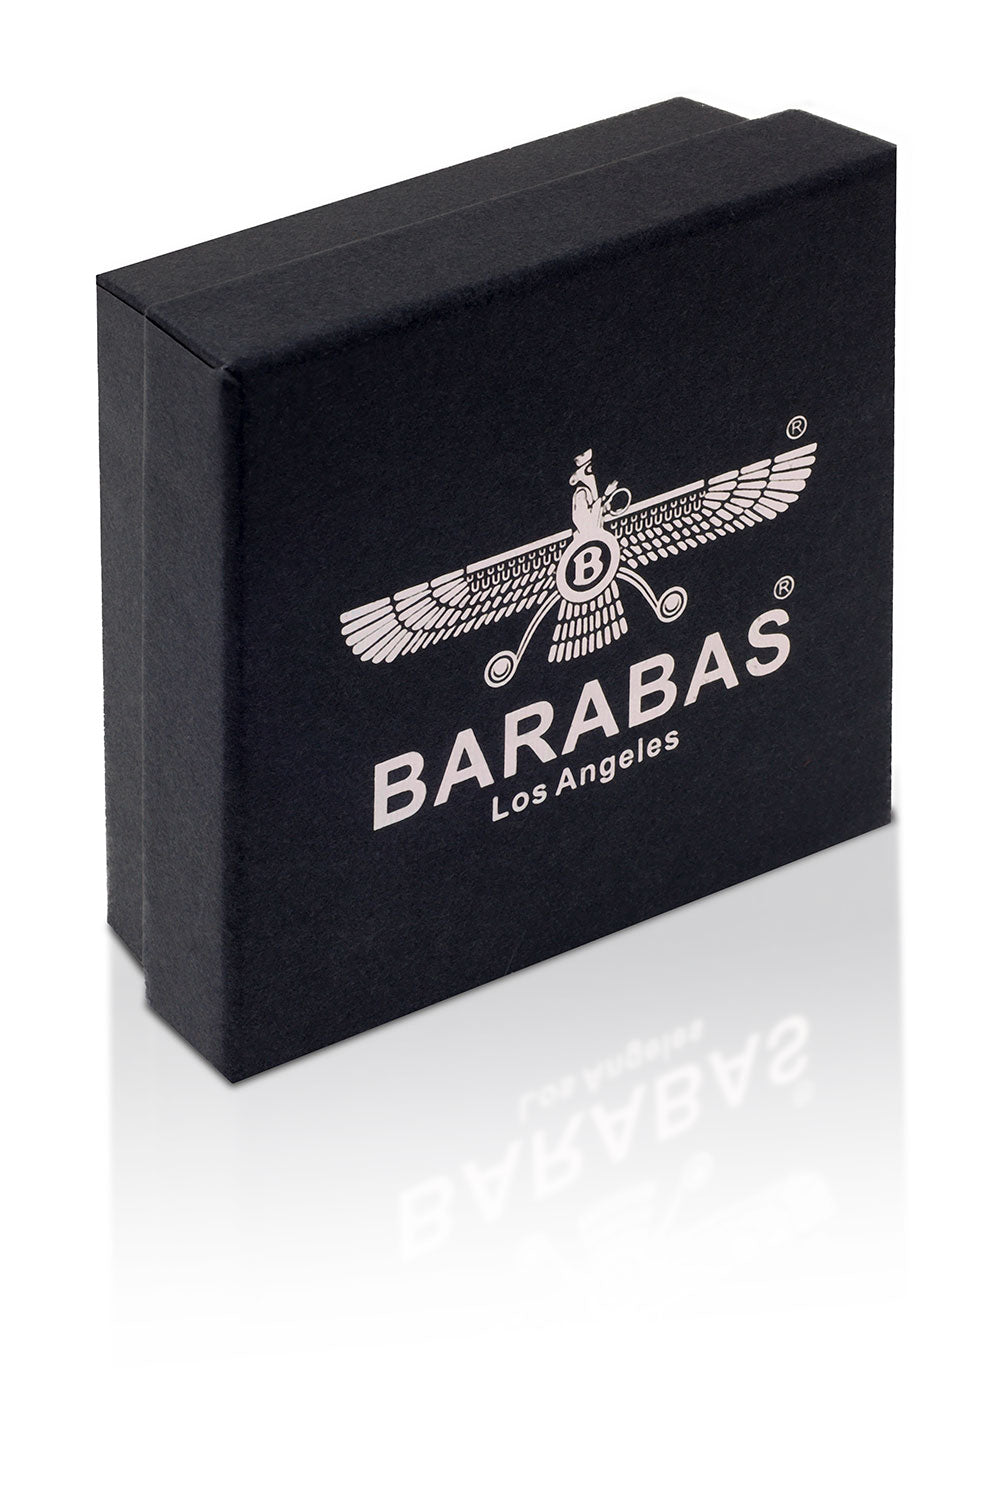 Barabas Unisex Stainless Steel Black Cross Pendant Necklace 4NK04 Black